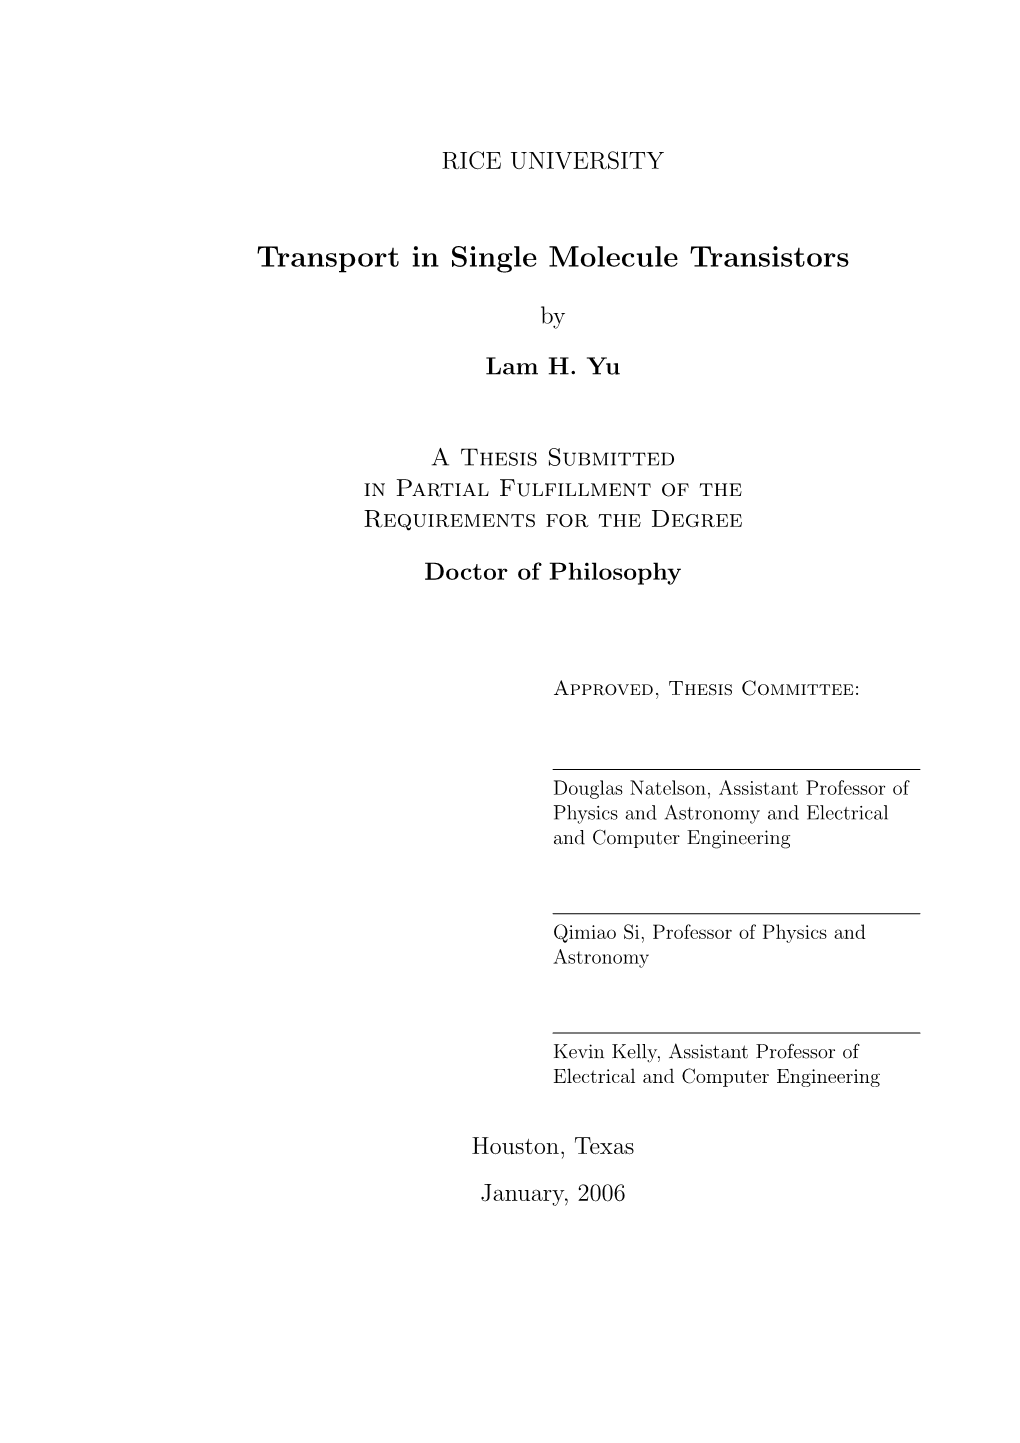 Transport in Single Molecule Transistors